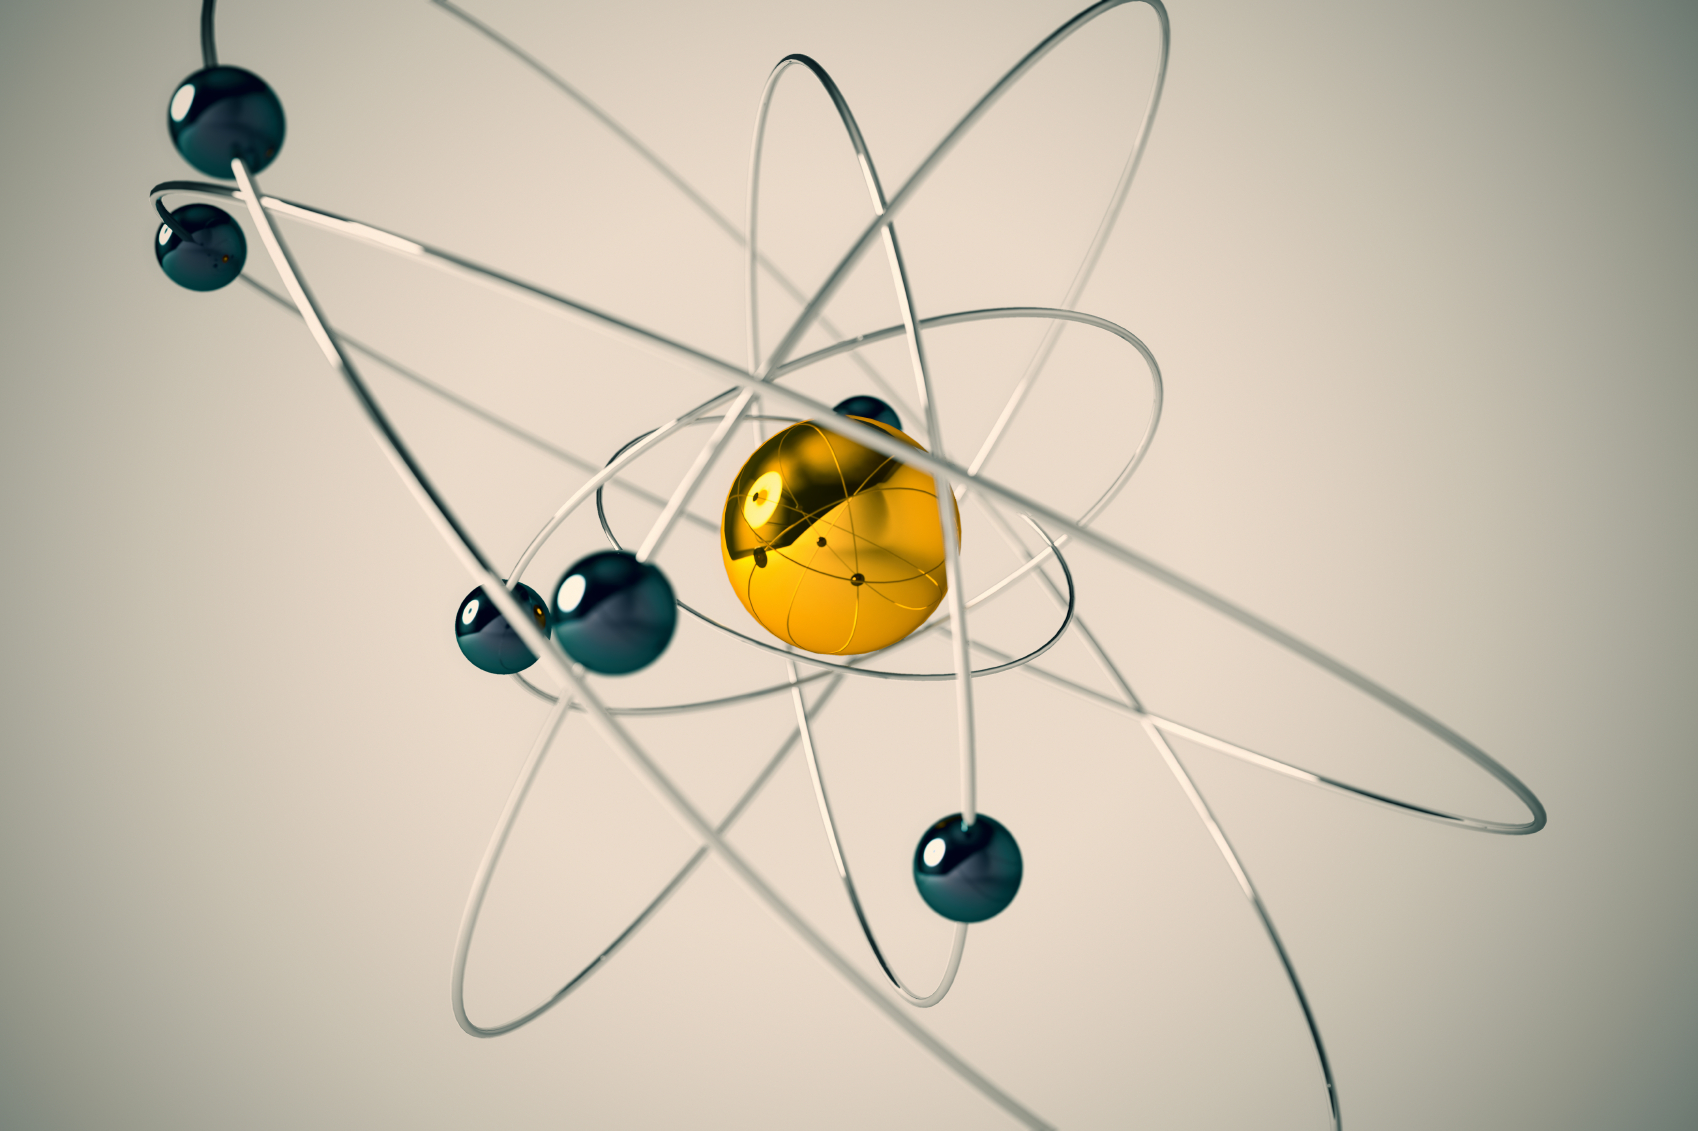 image of an atom